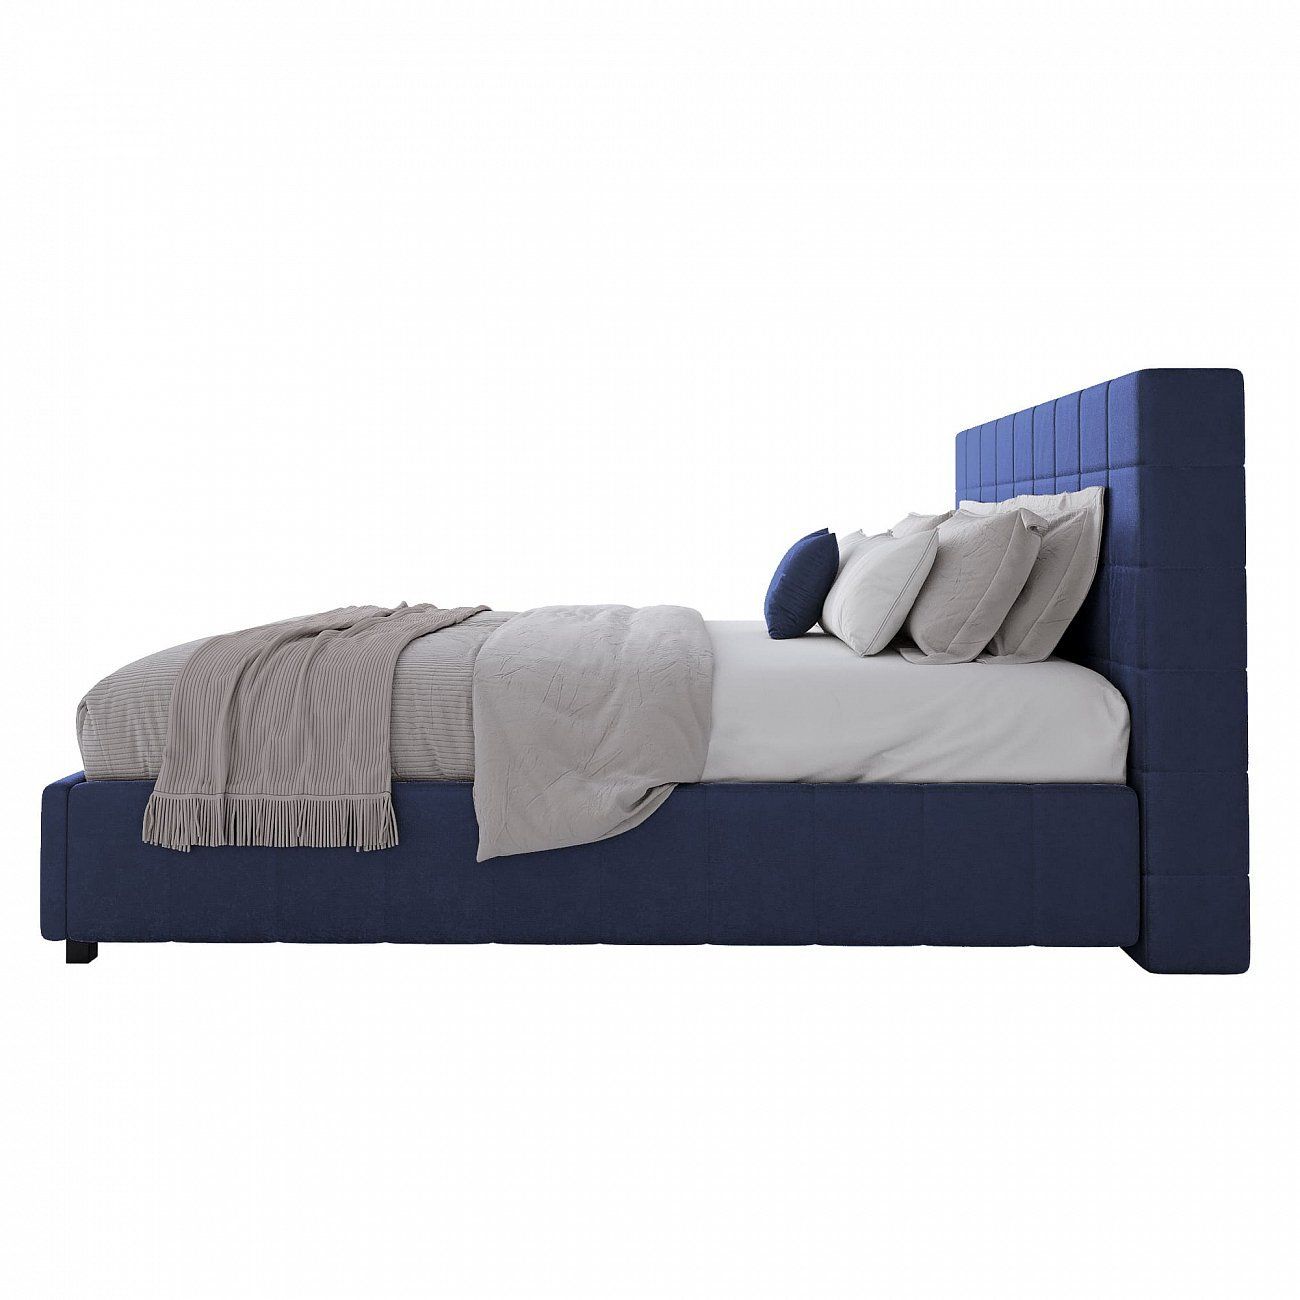 Double bed 180x200 cm blue Shining Modern